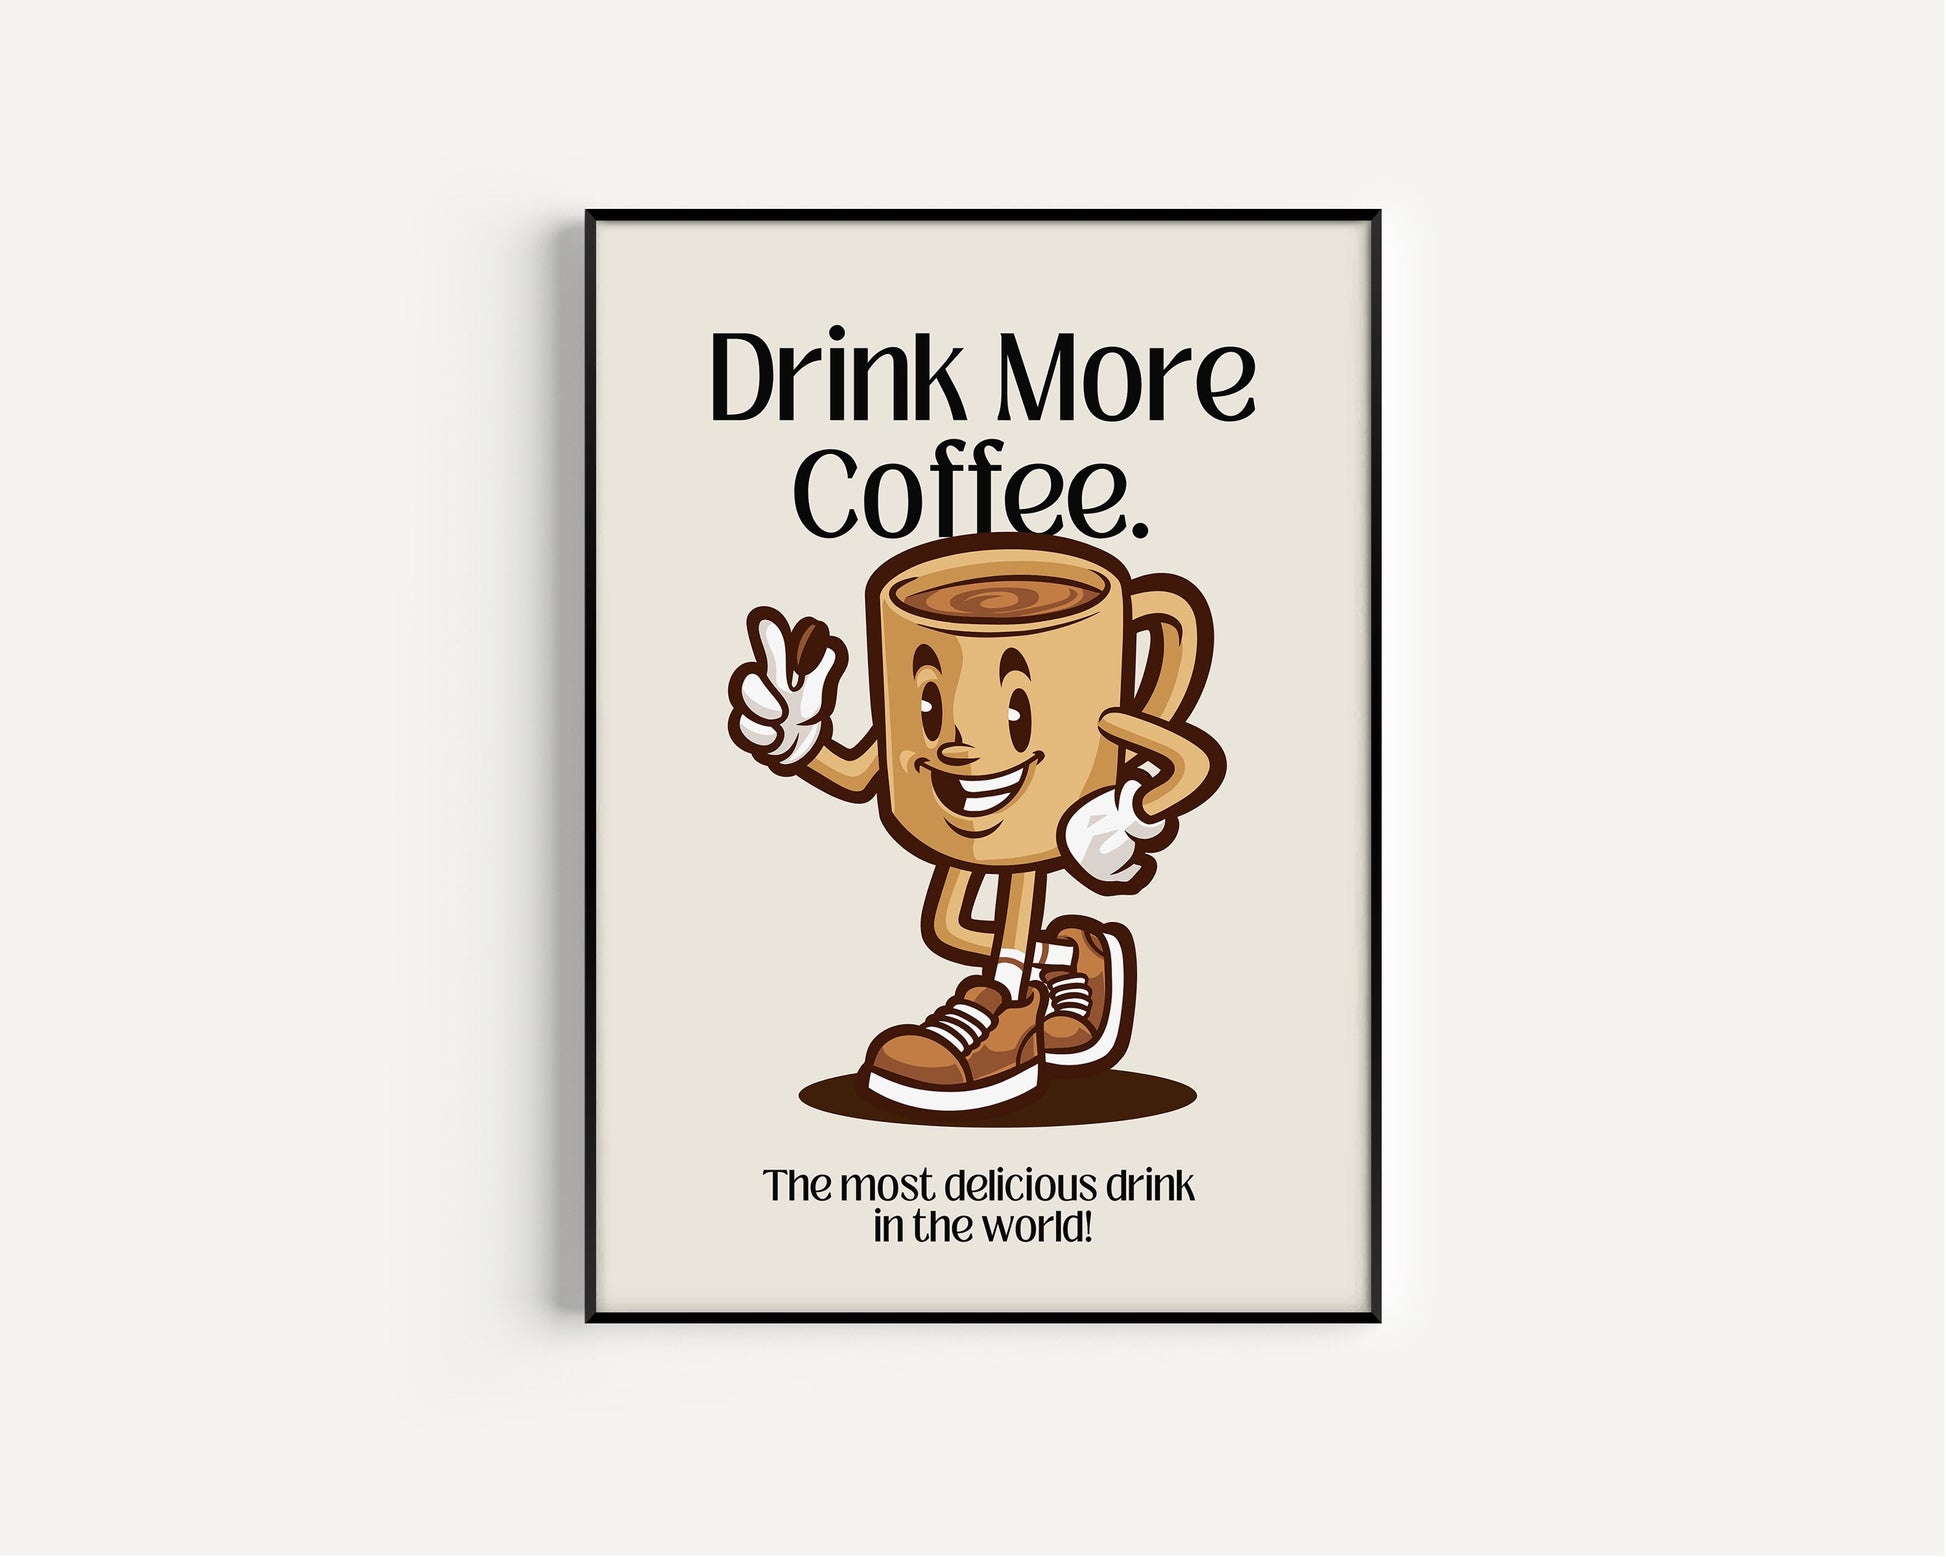 Coffee Retro Character Print, Coffee Retro Cartoon, Drink More Coffee, Retro Wall Art, Retro Character Poster, Kitchen Print, Quote